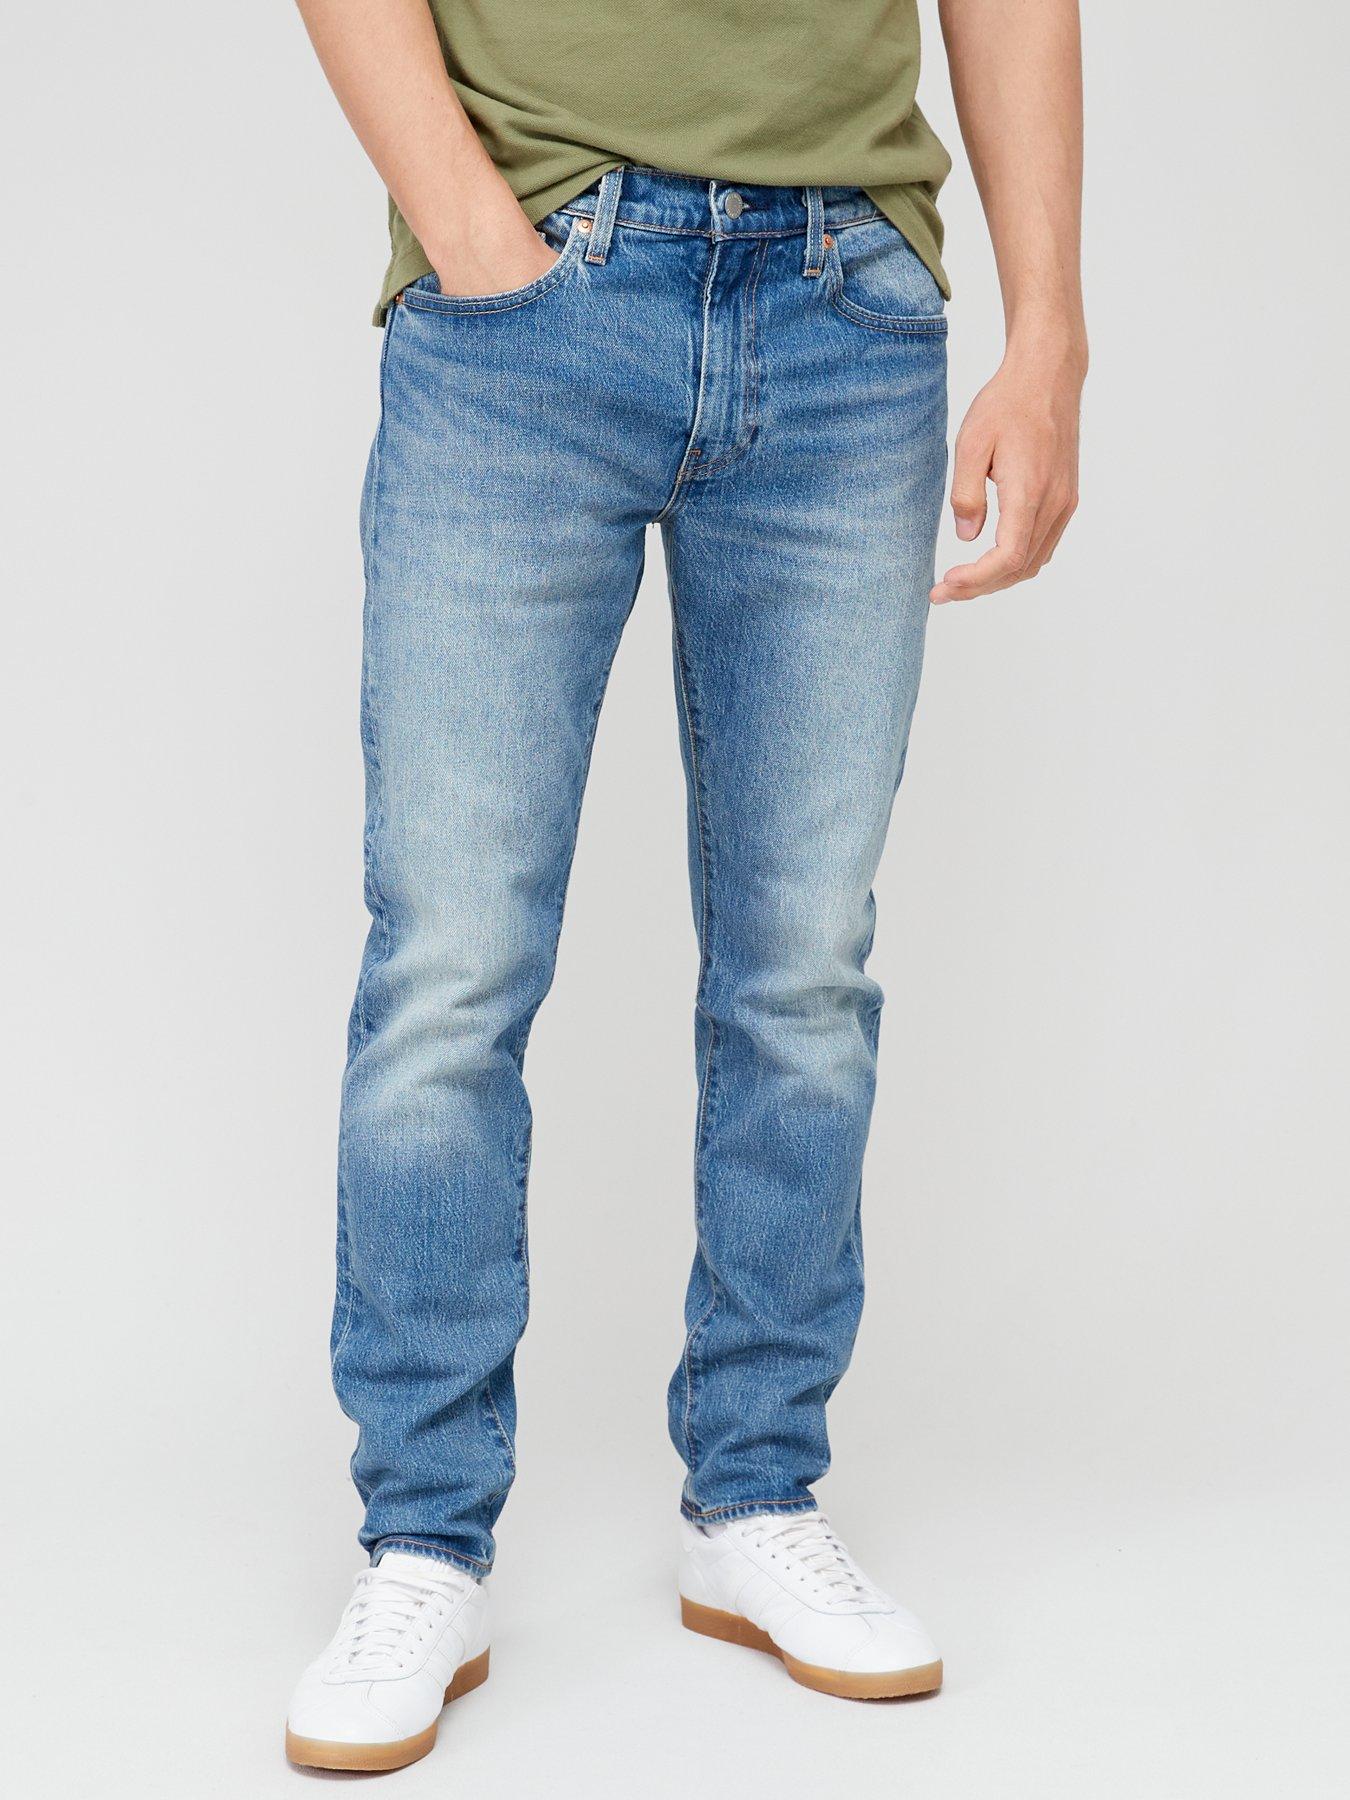 Levi's Levi's 512 Slim Taper Fit Jeans - Mid Wash 